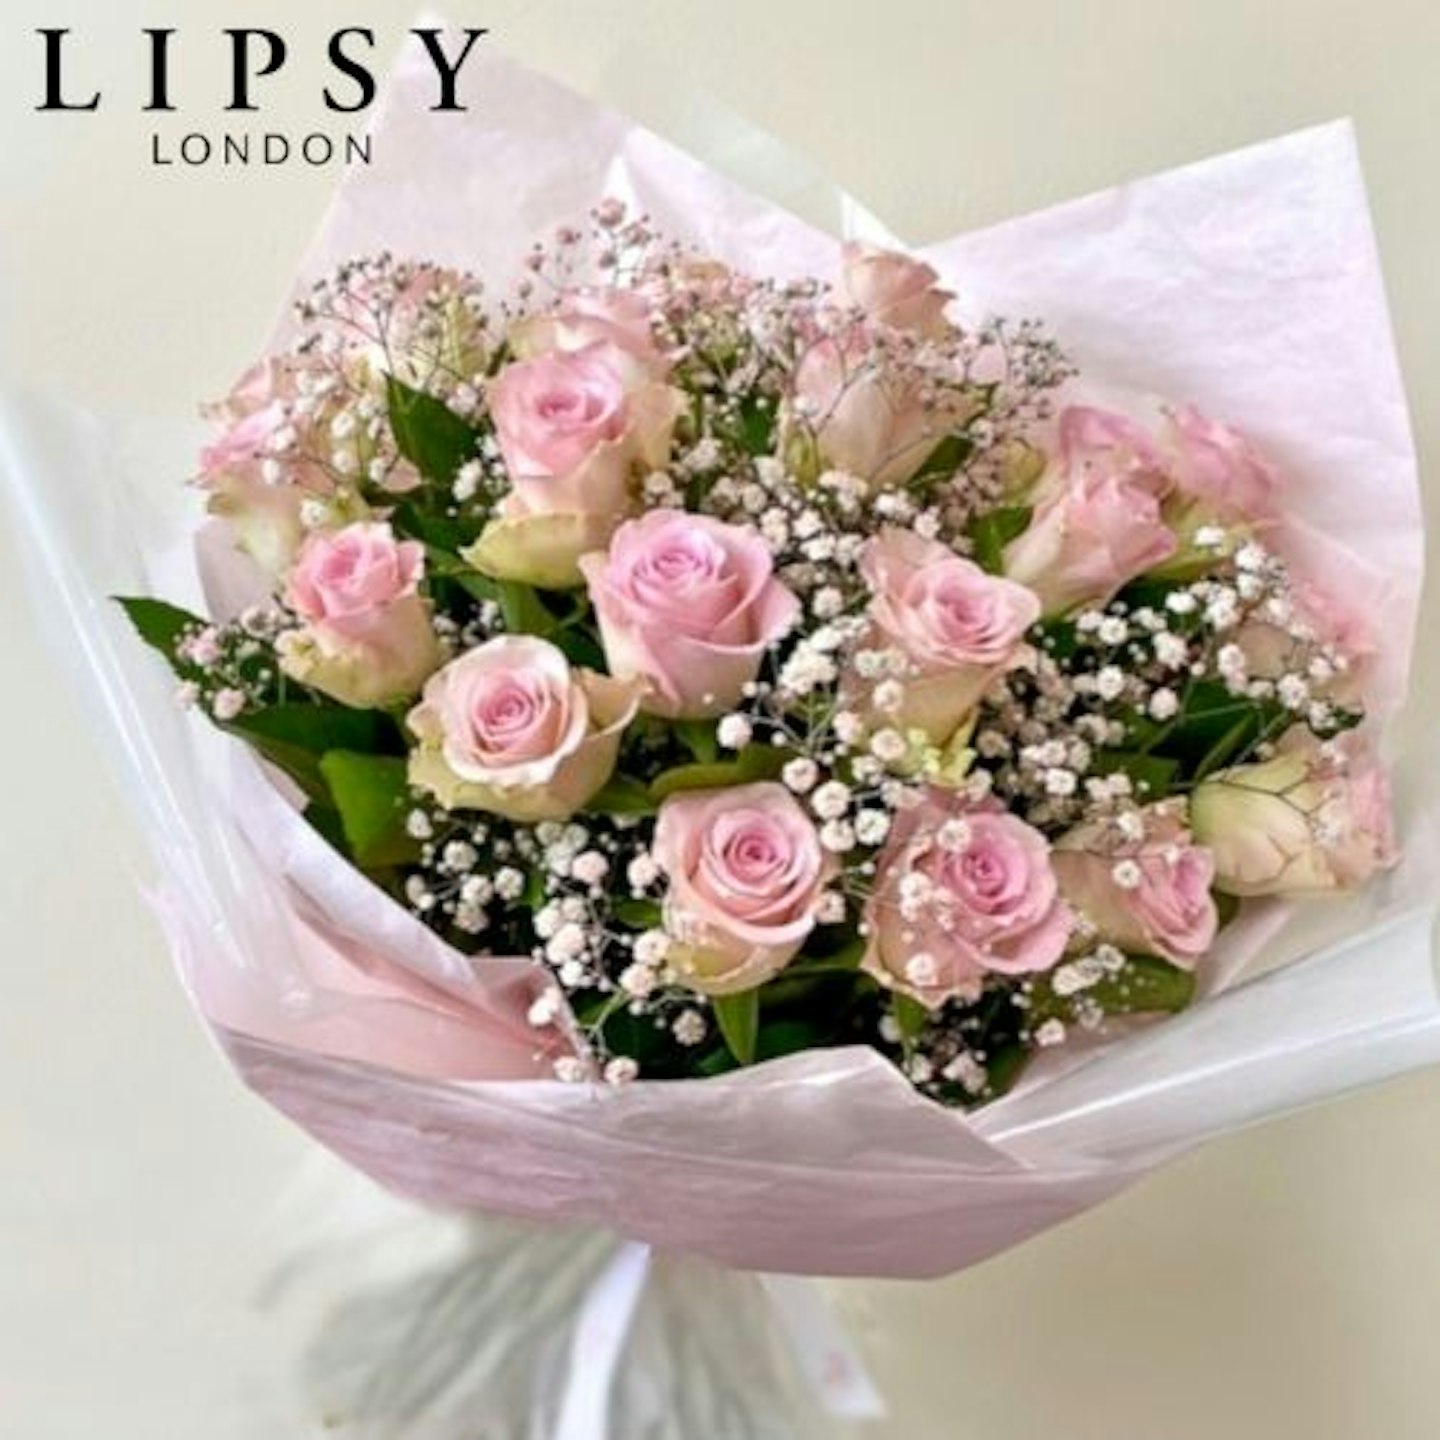 Lipsy Rose Bouquet